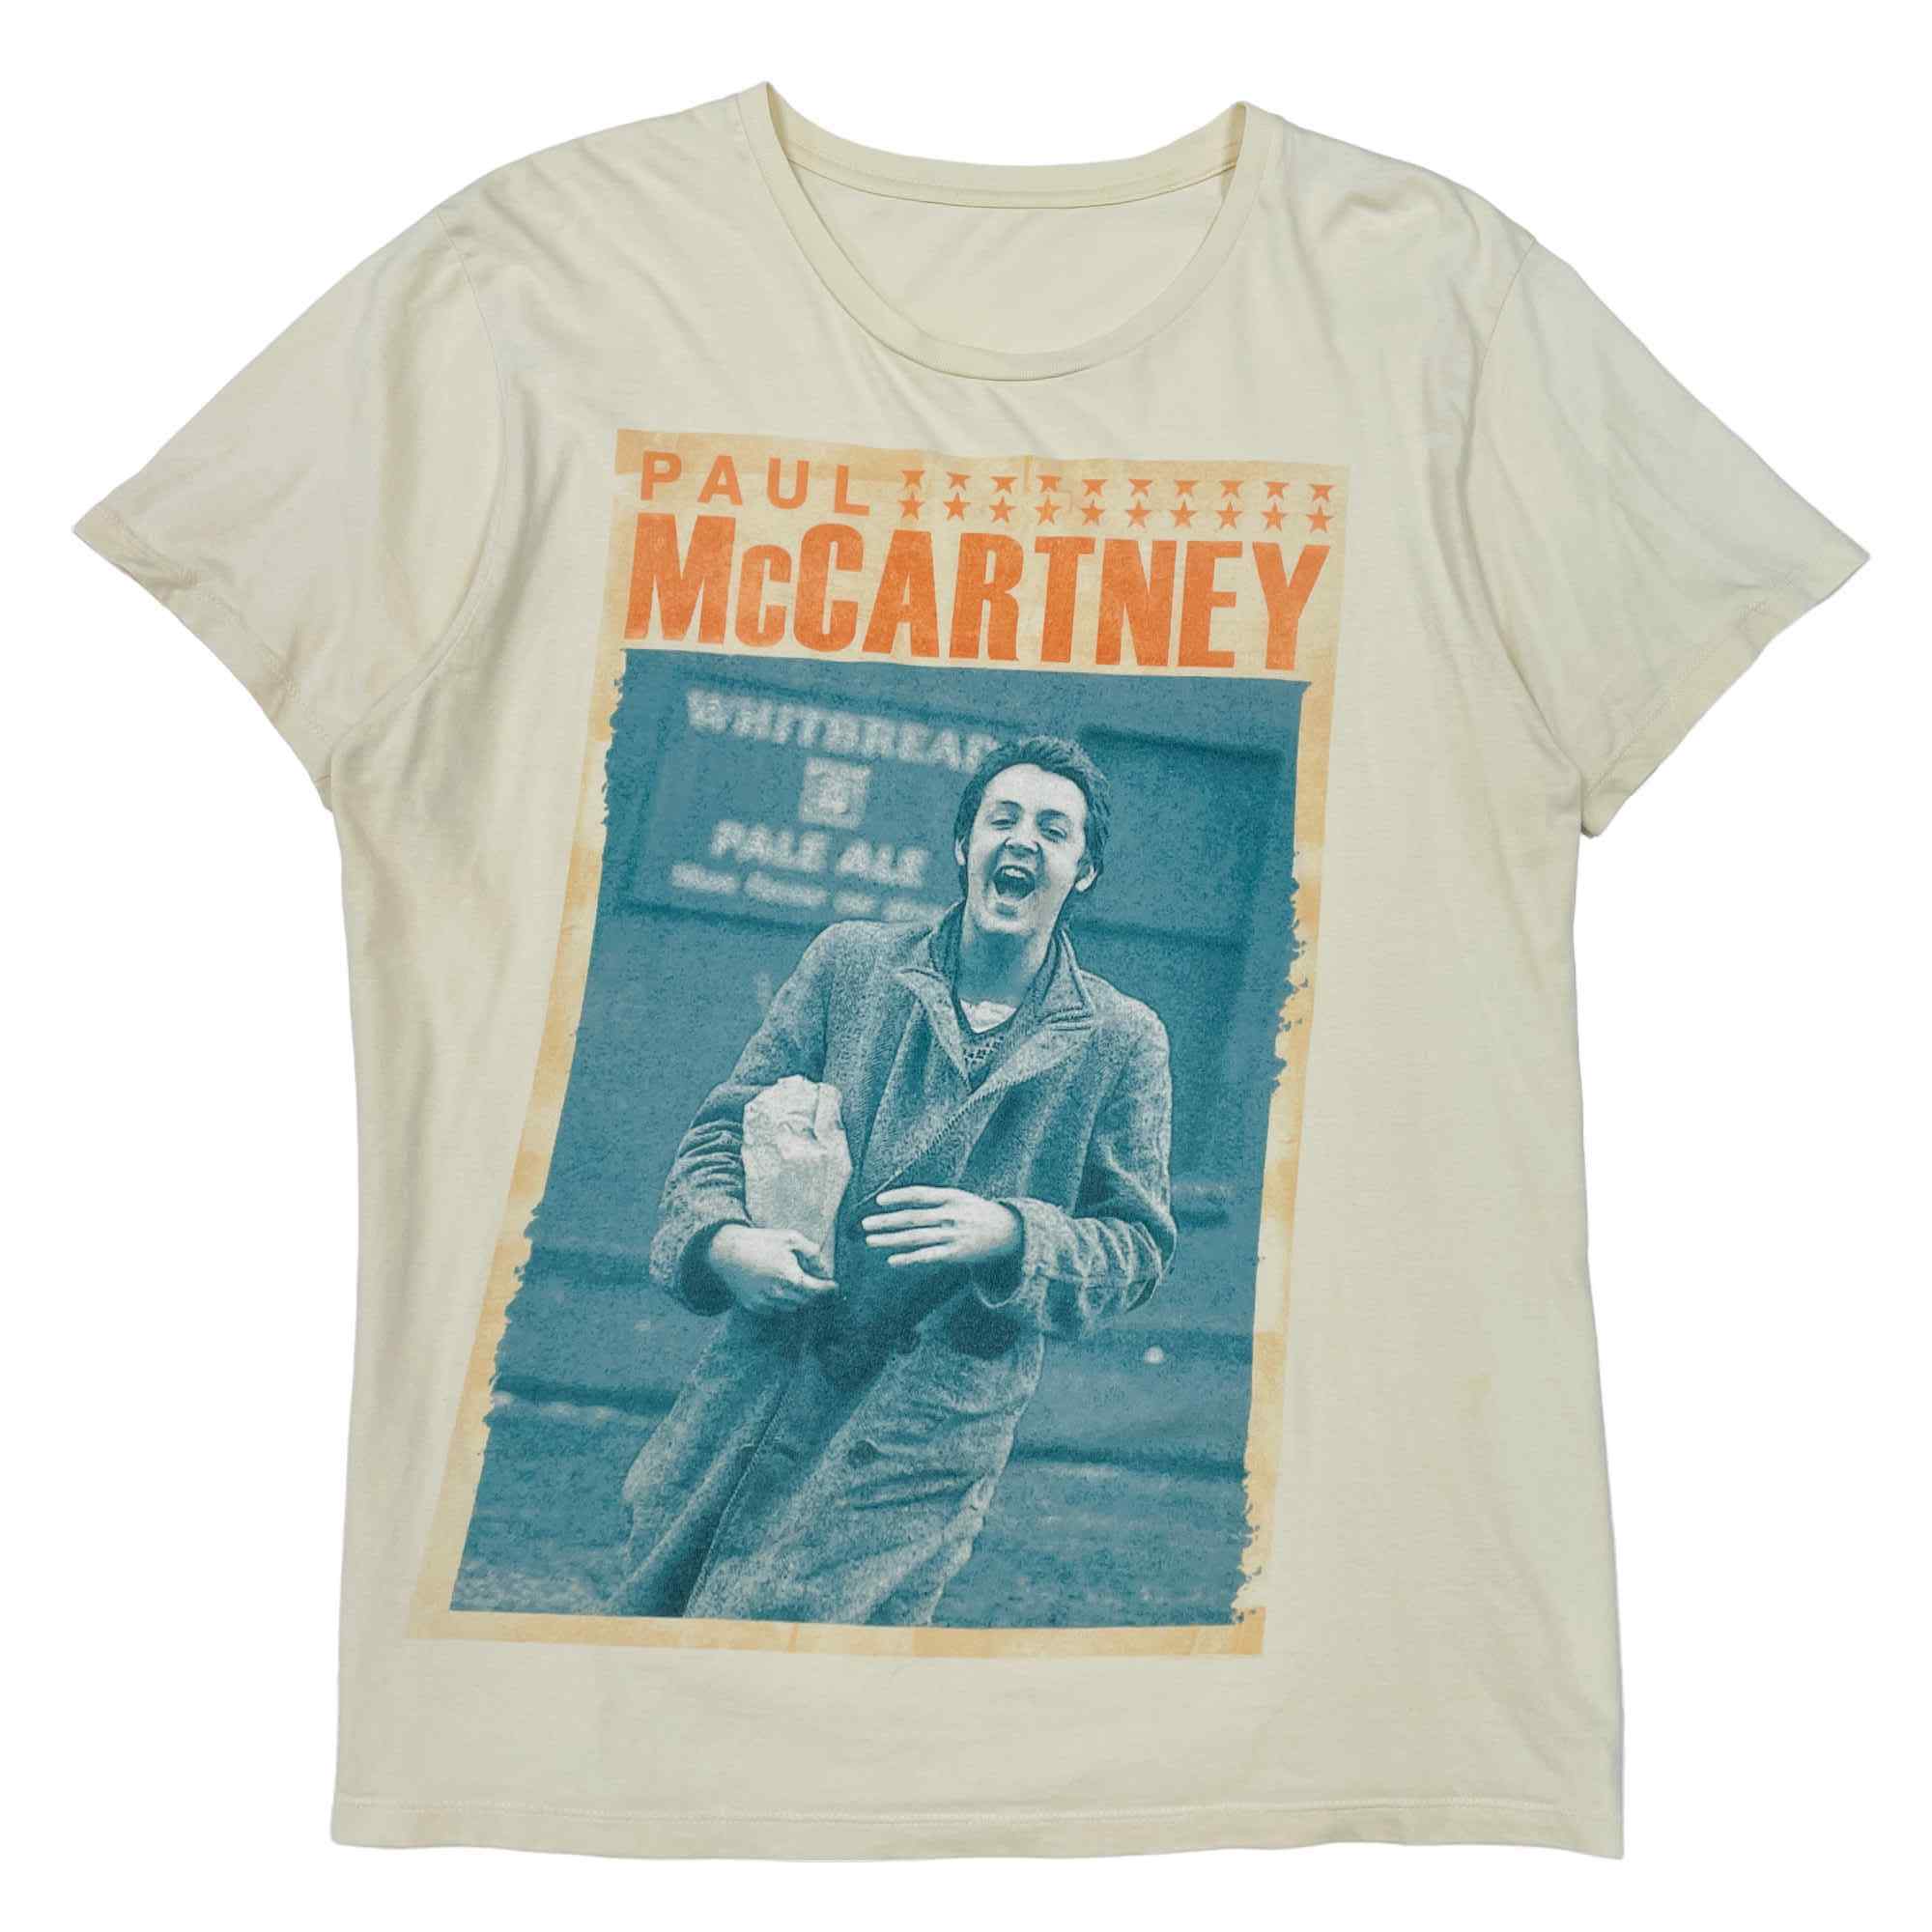 Paul McCartney Graphic T-Shirt - Medium